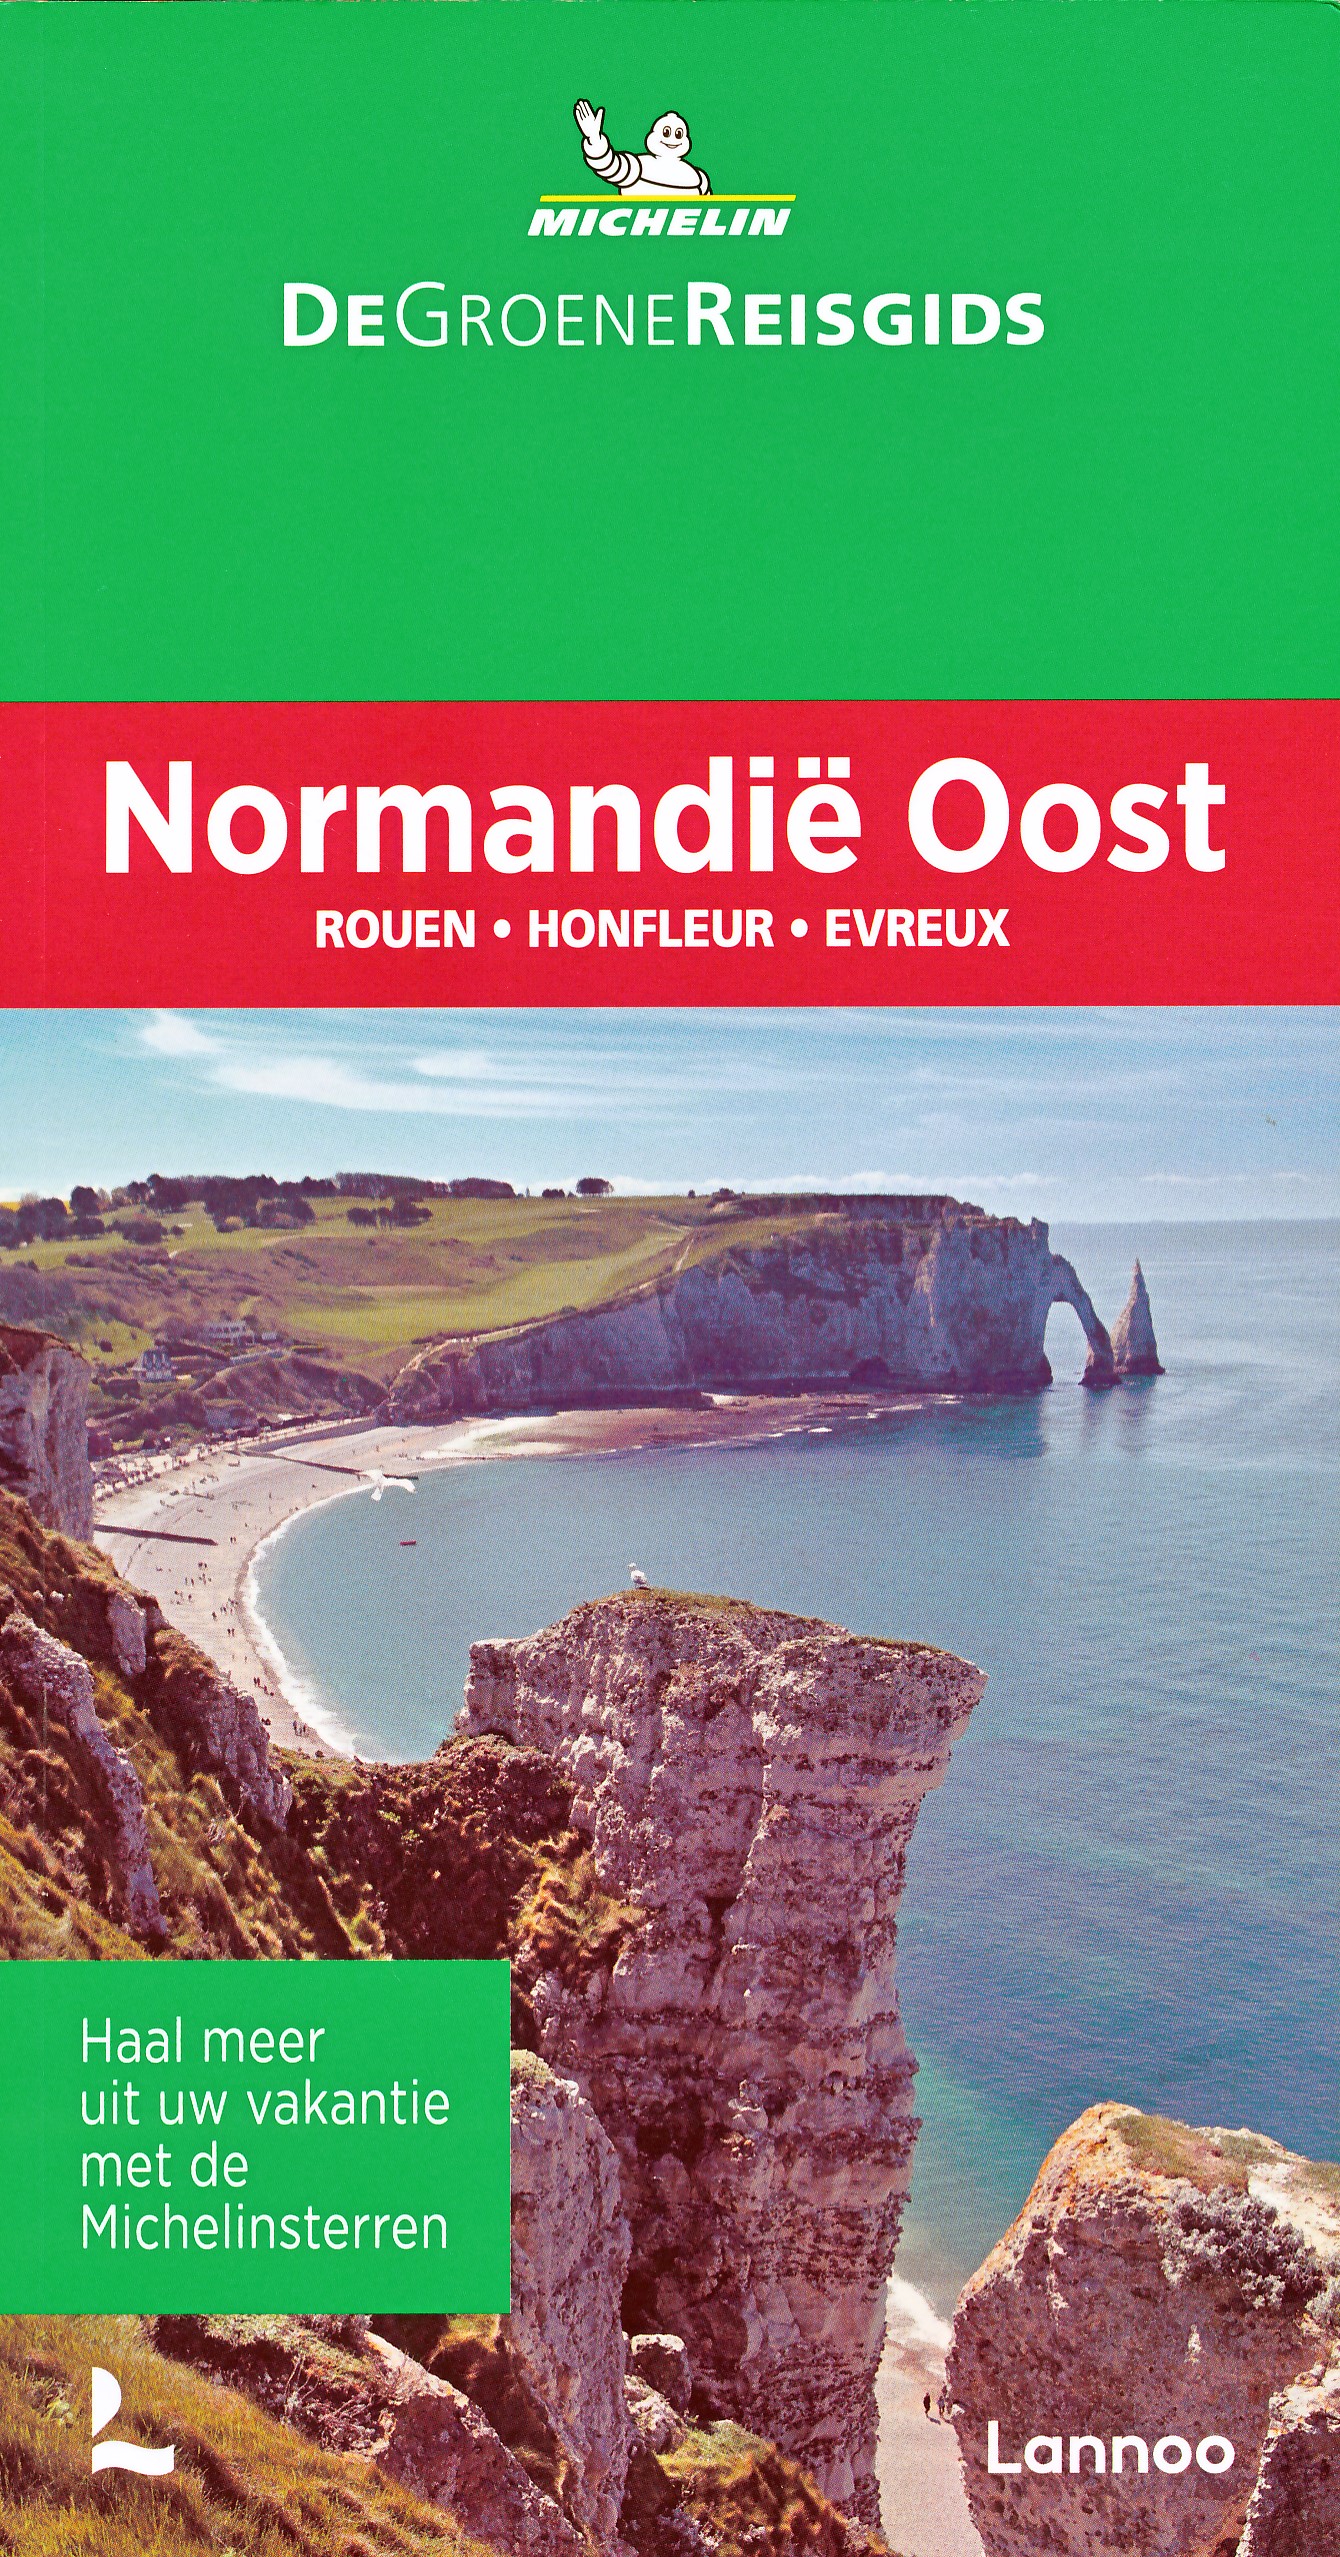 Online bestellen: Reisgids Michelin groene gids Normandie Oost (Honfleur - Evreux- Rouen ) | Lannoo